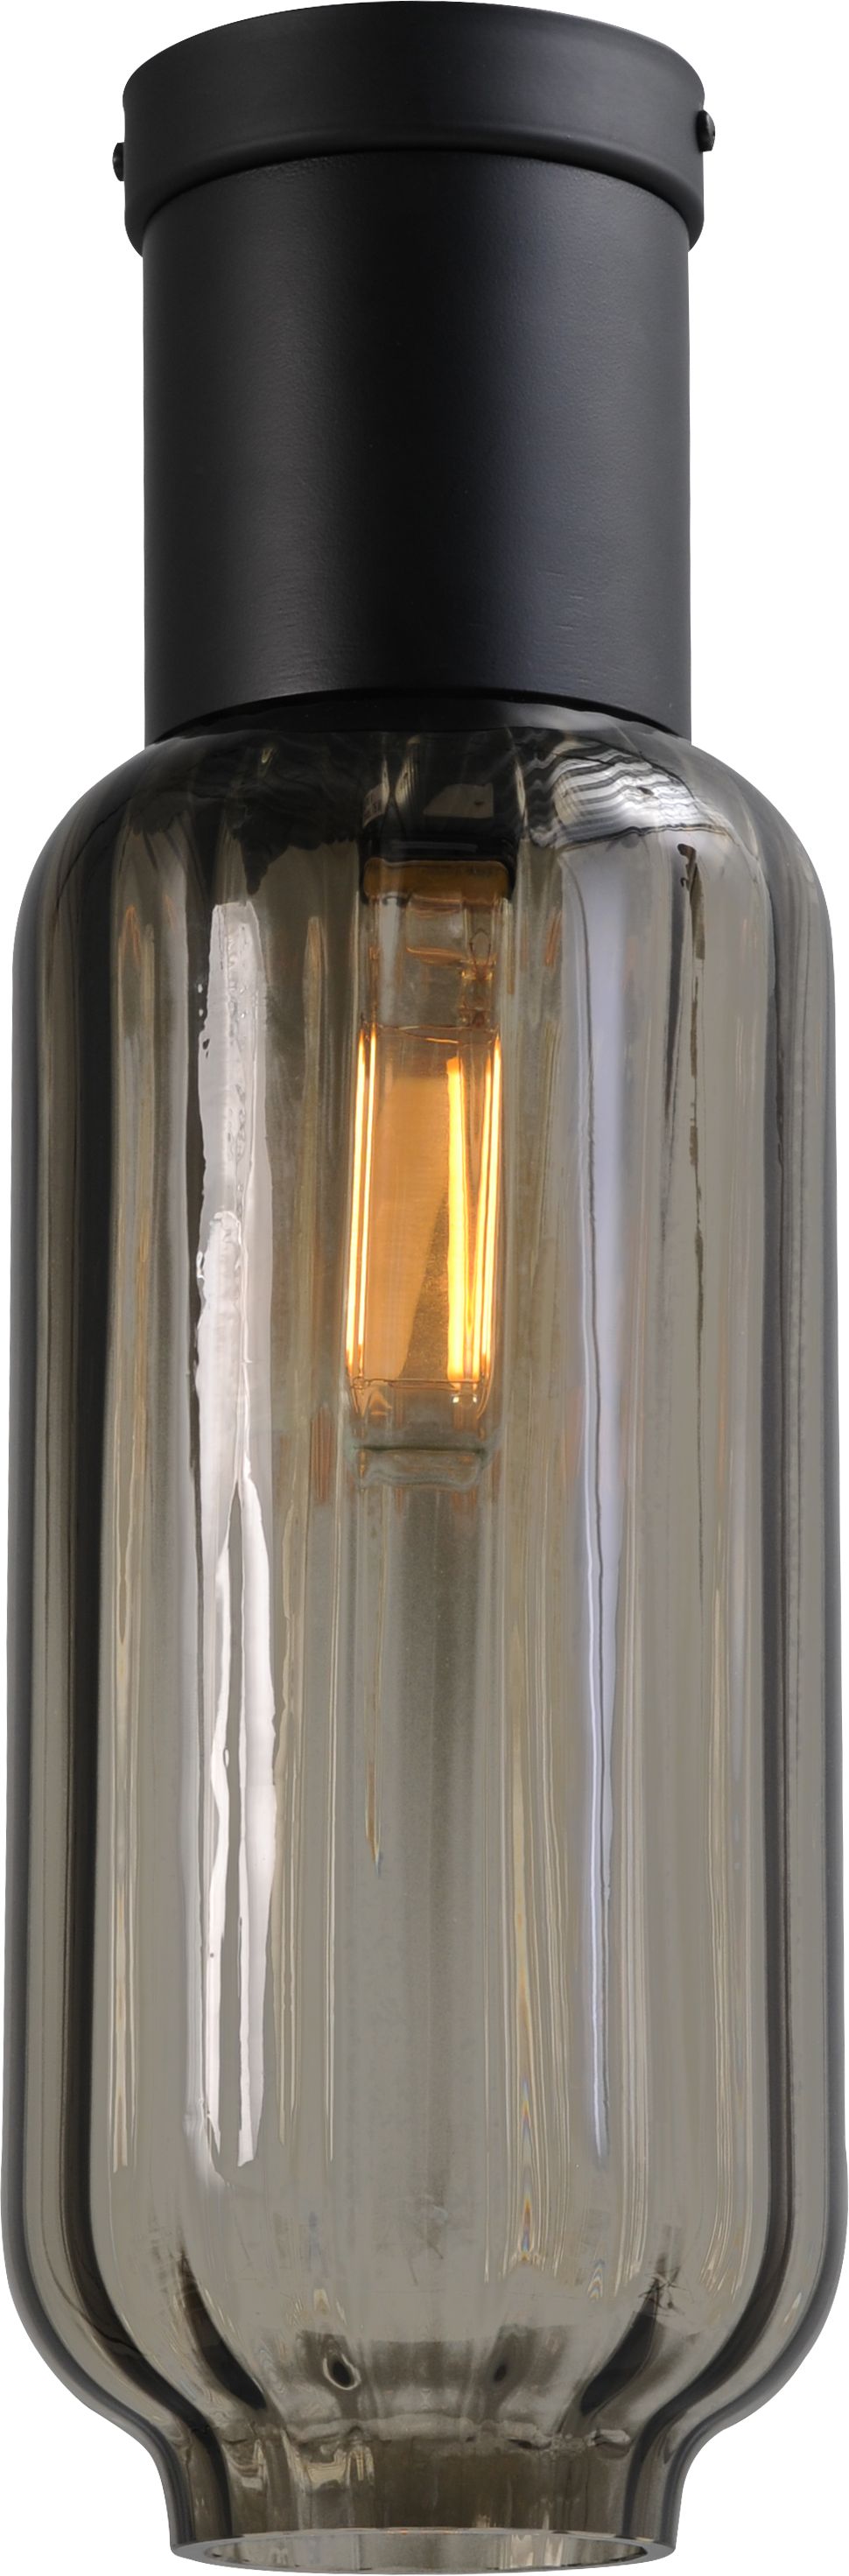 Deckenlampe Rauchglas Metall E27 Ø 15 cm ELYA